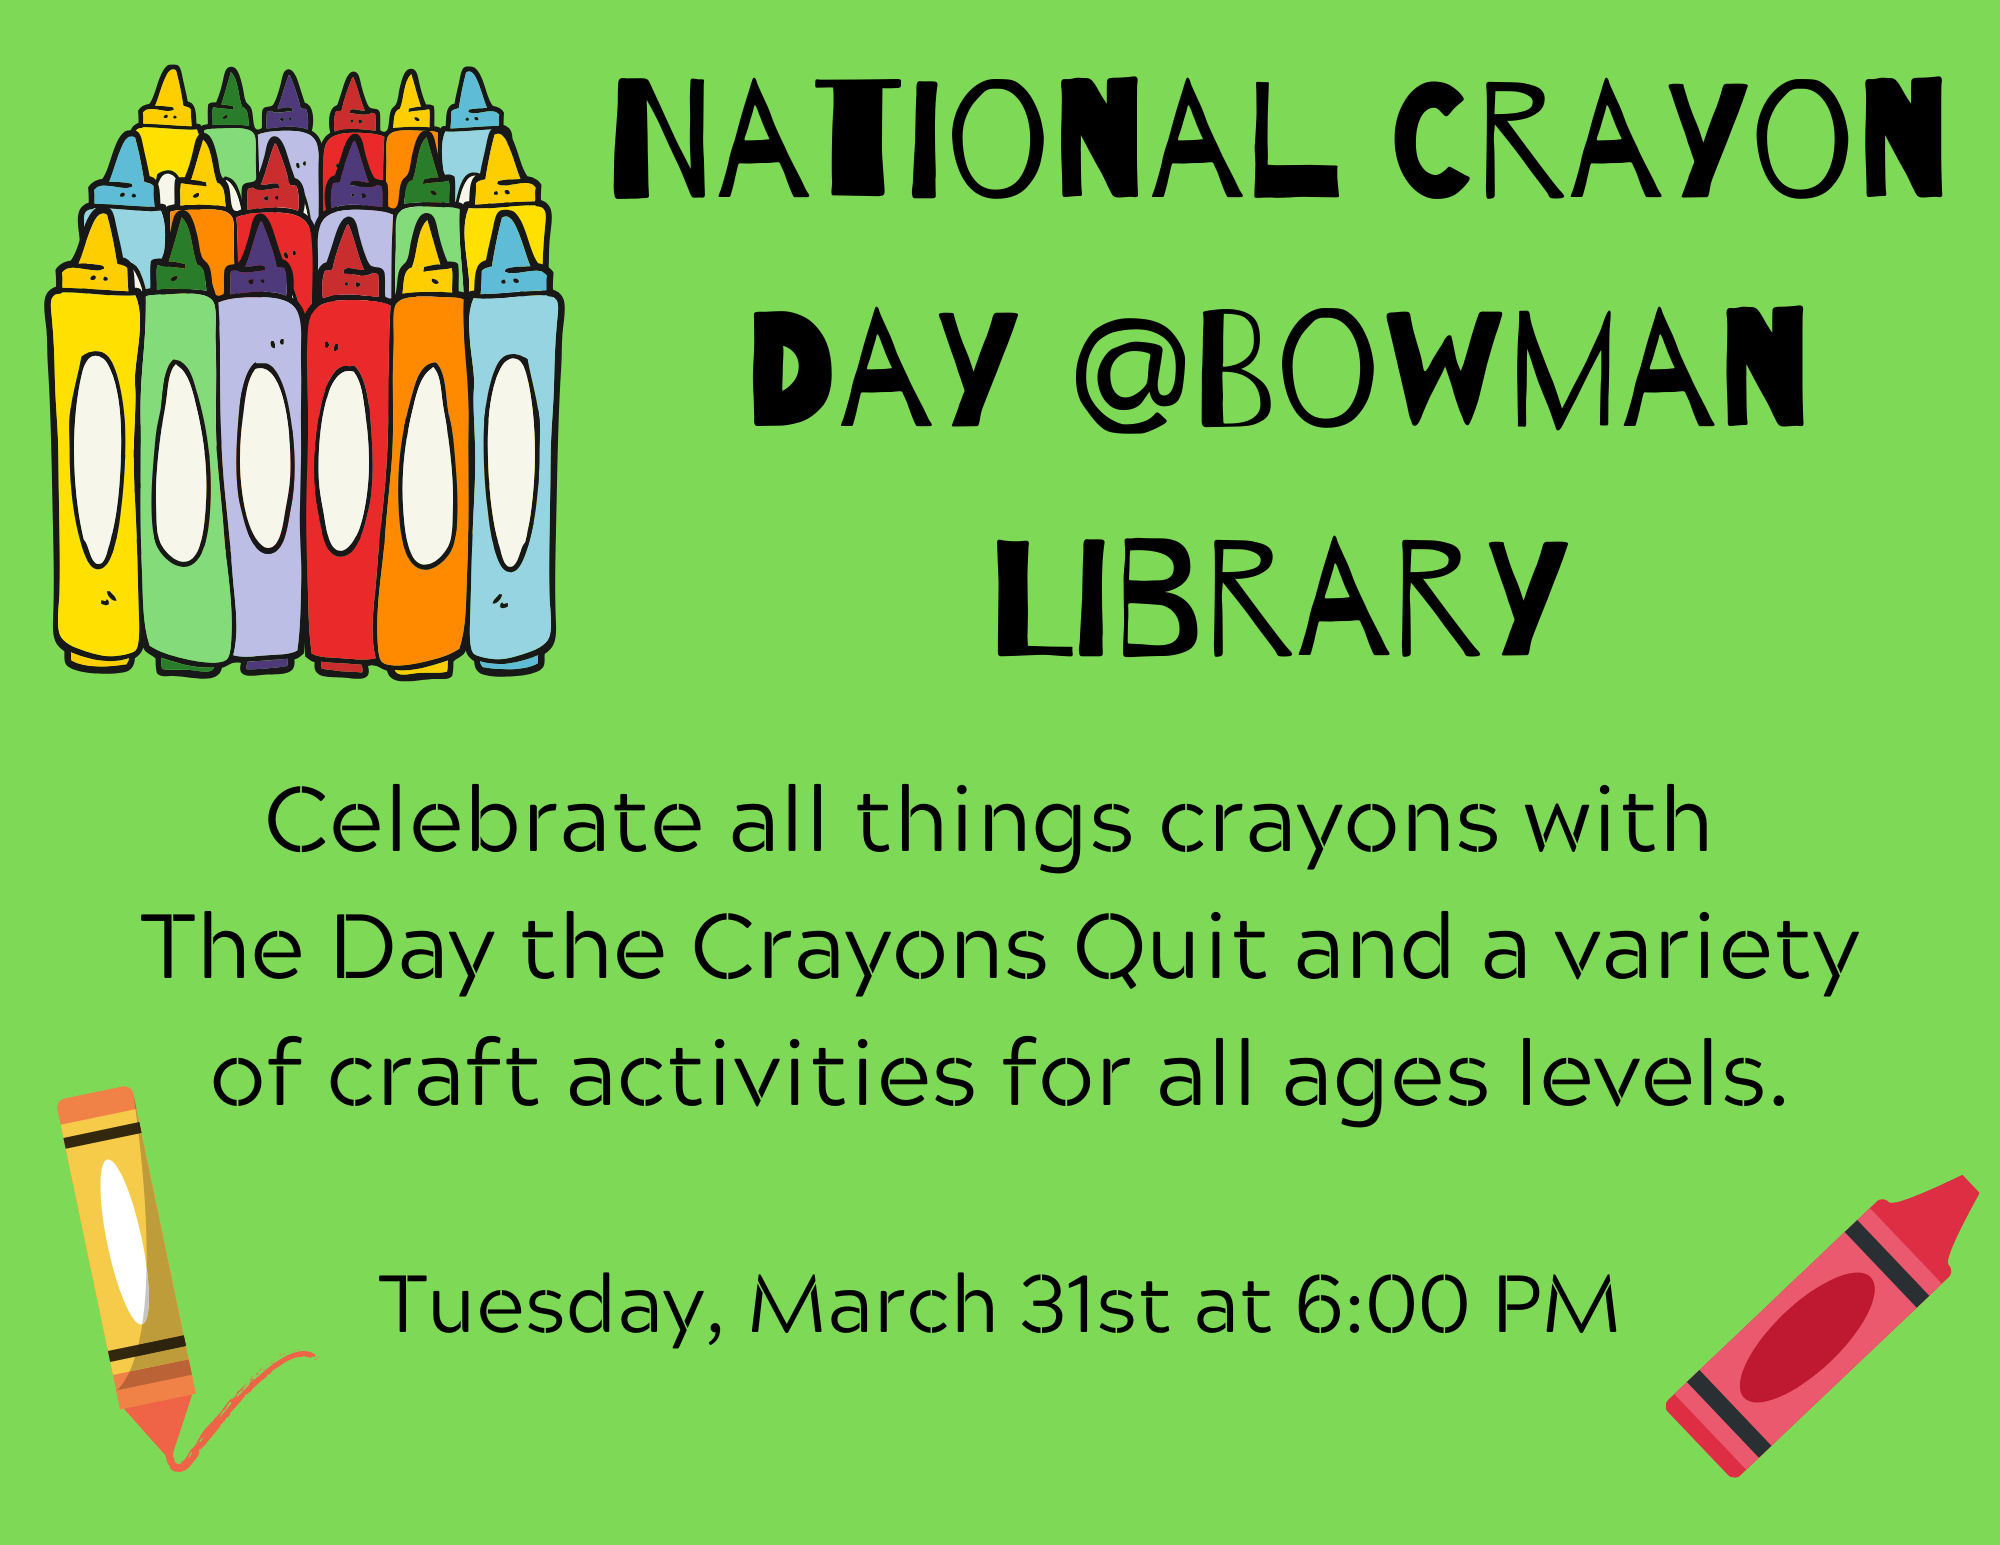 National Crayon Day @Bowman Library